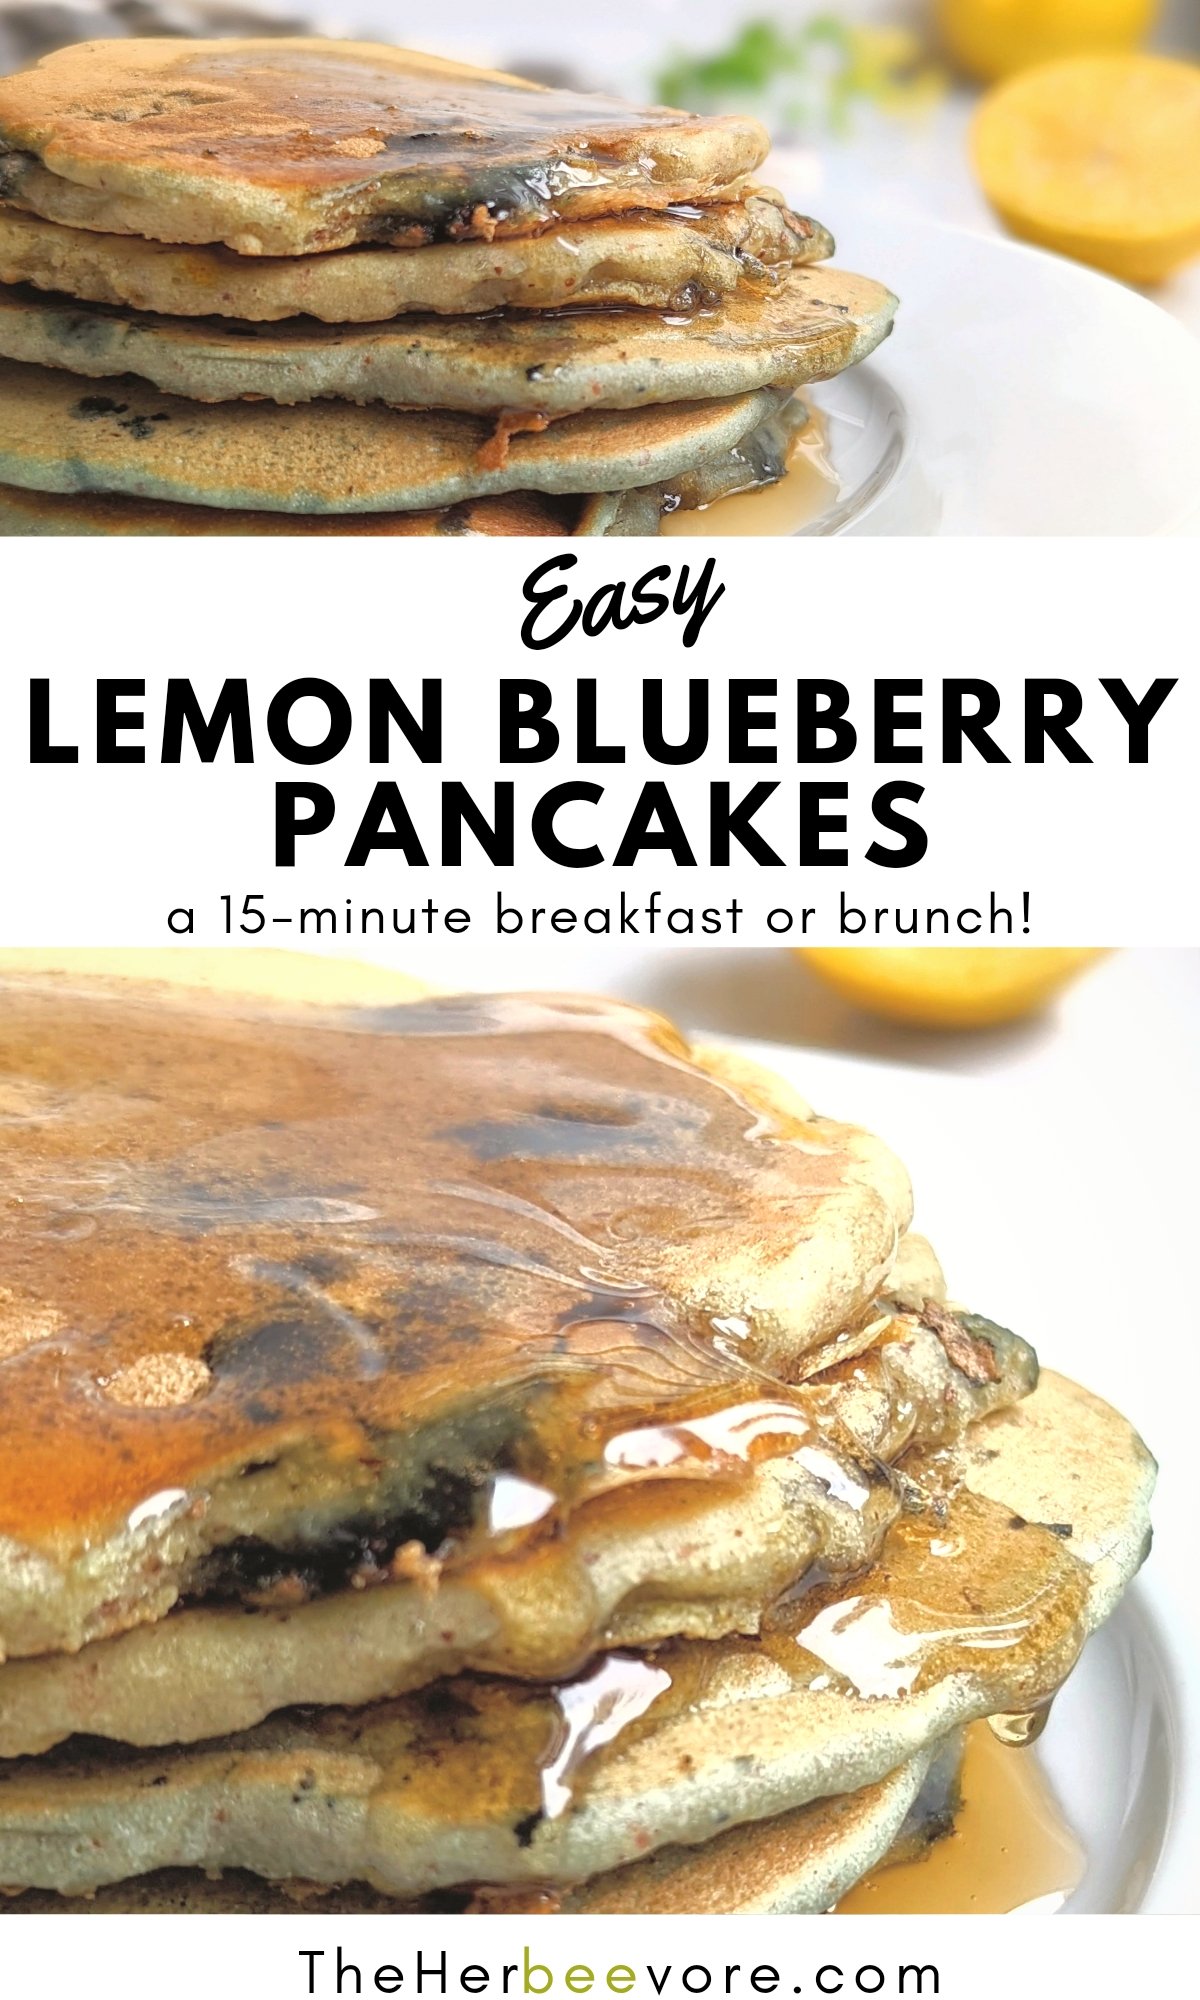 lemon blueberry pancakes recipe vegetarian breakfast or brunch recipes with lemons and blueberries